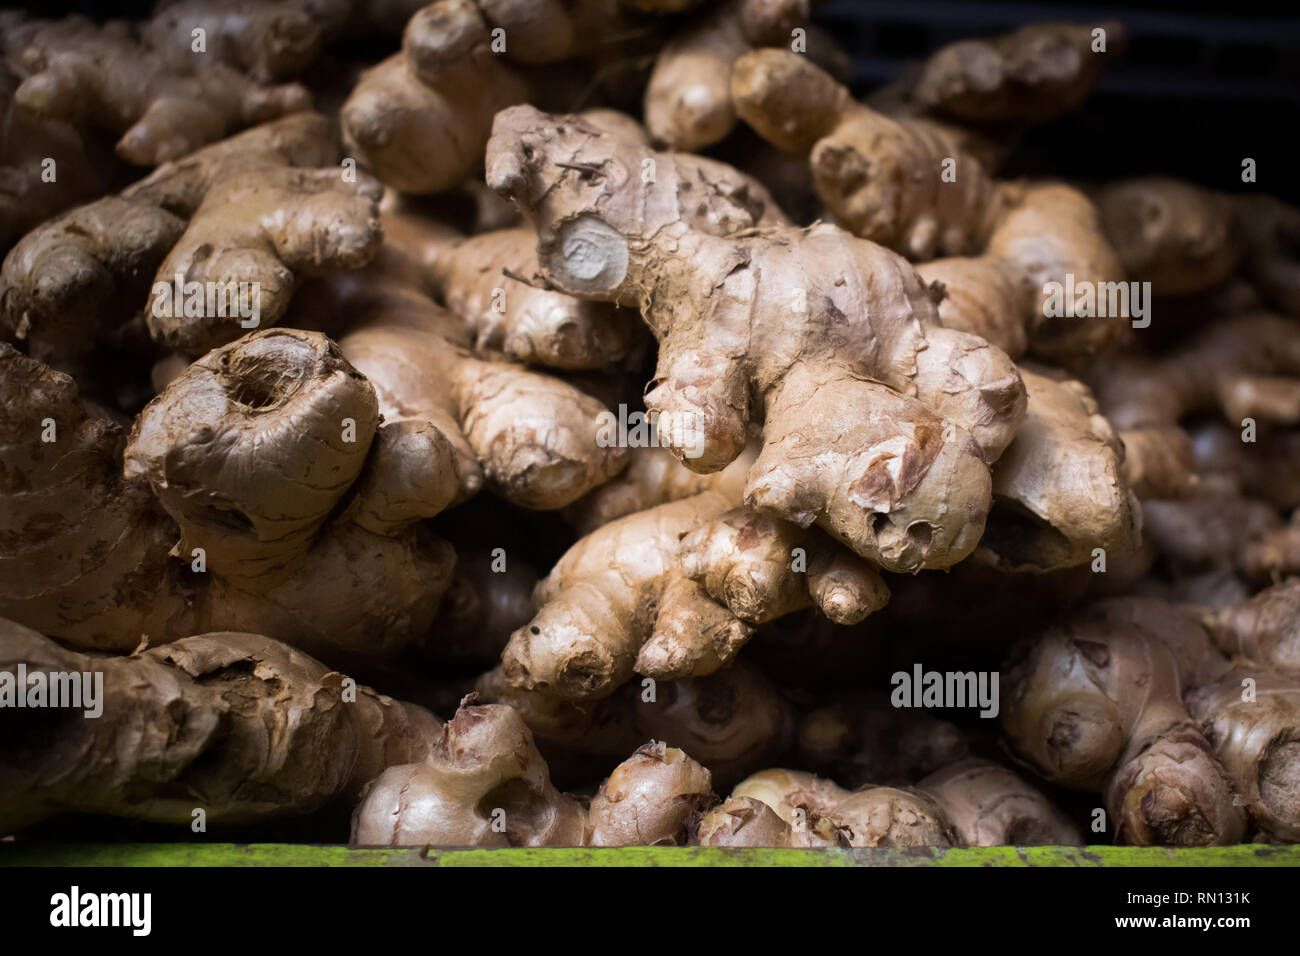 Fresh gingers displayed at the fresh market Stock Photo